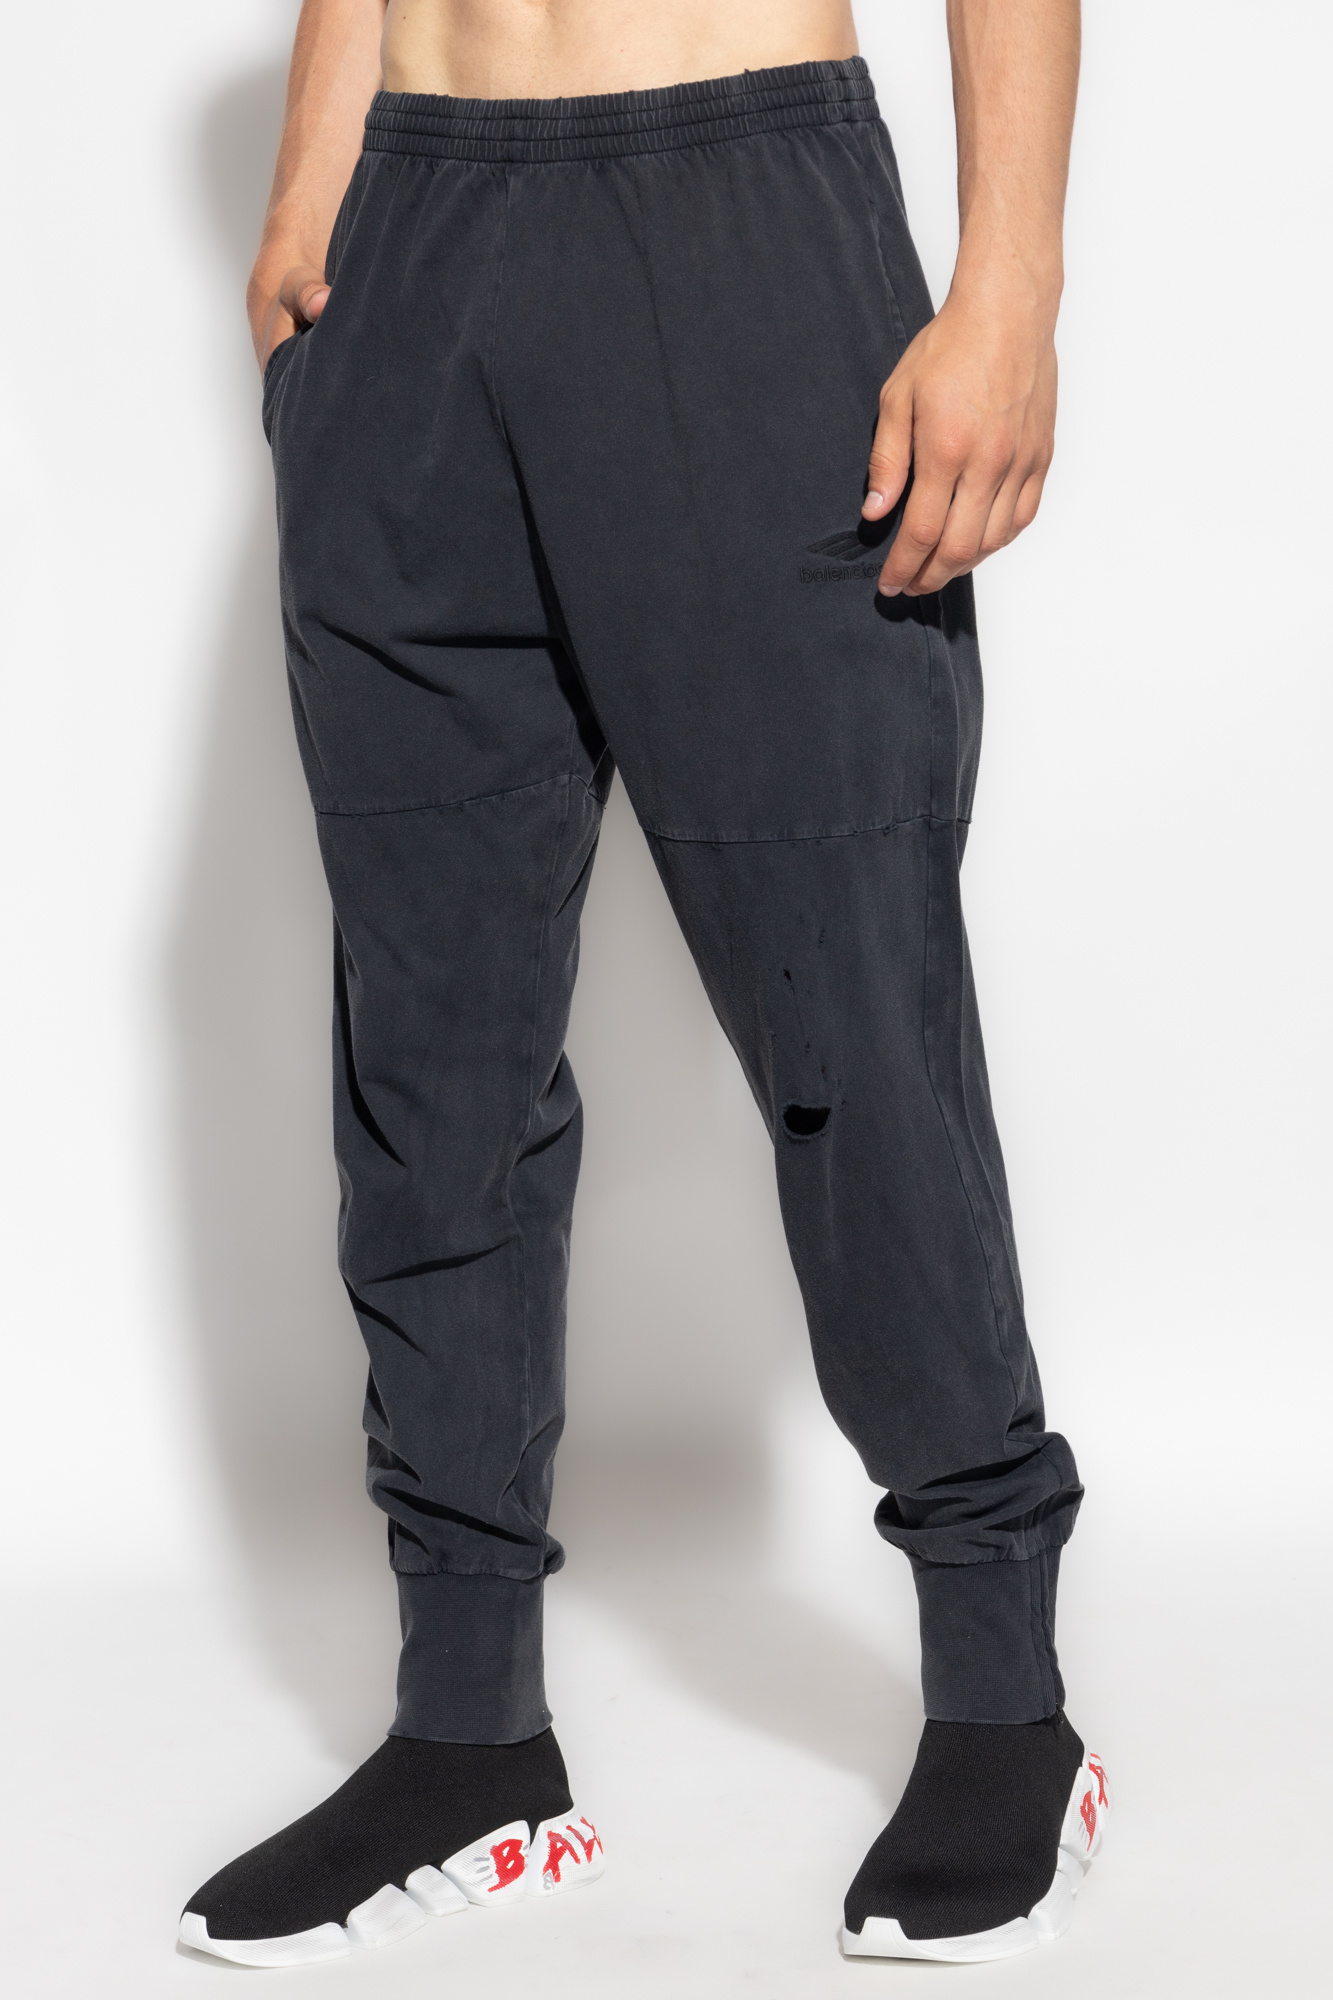 Balenciaga Sweatpants with logo | Men's Clothing | Vitkac